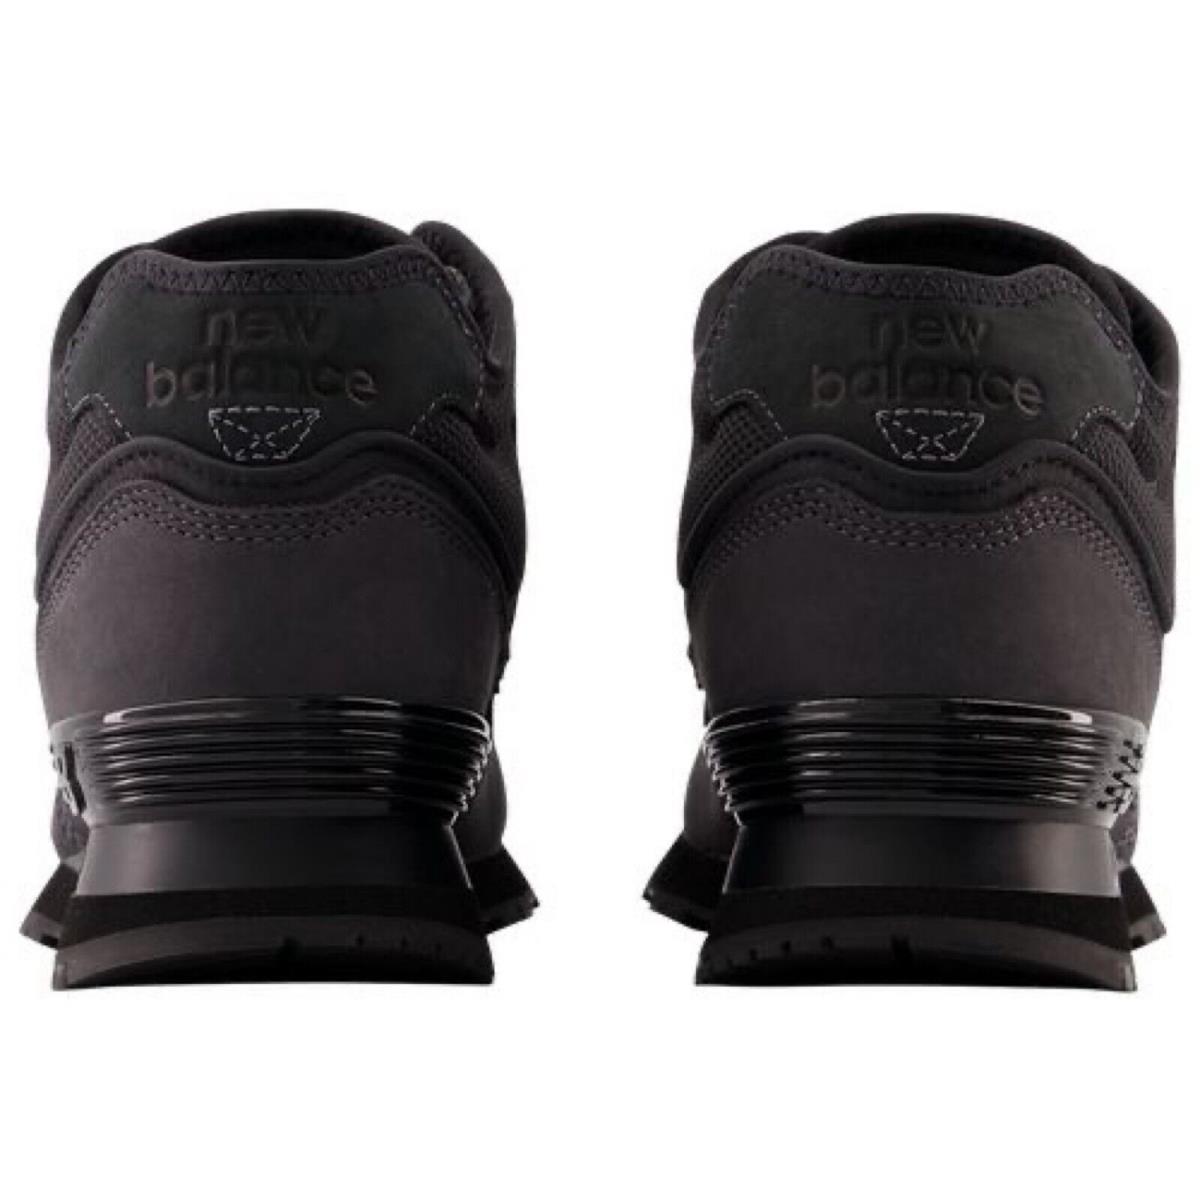 New Balance shoes  - Brown , Grey/Black Manufacturer 20